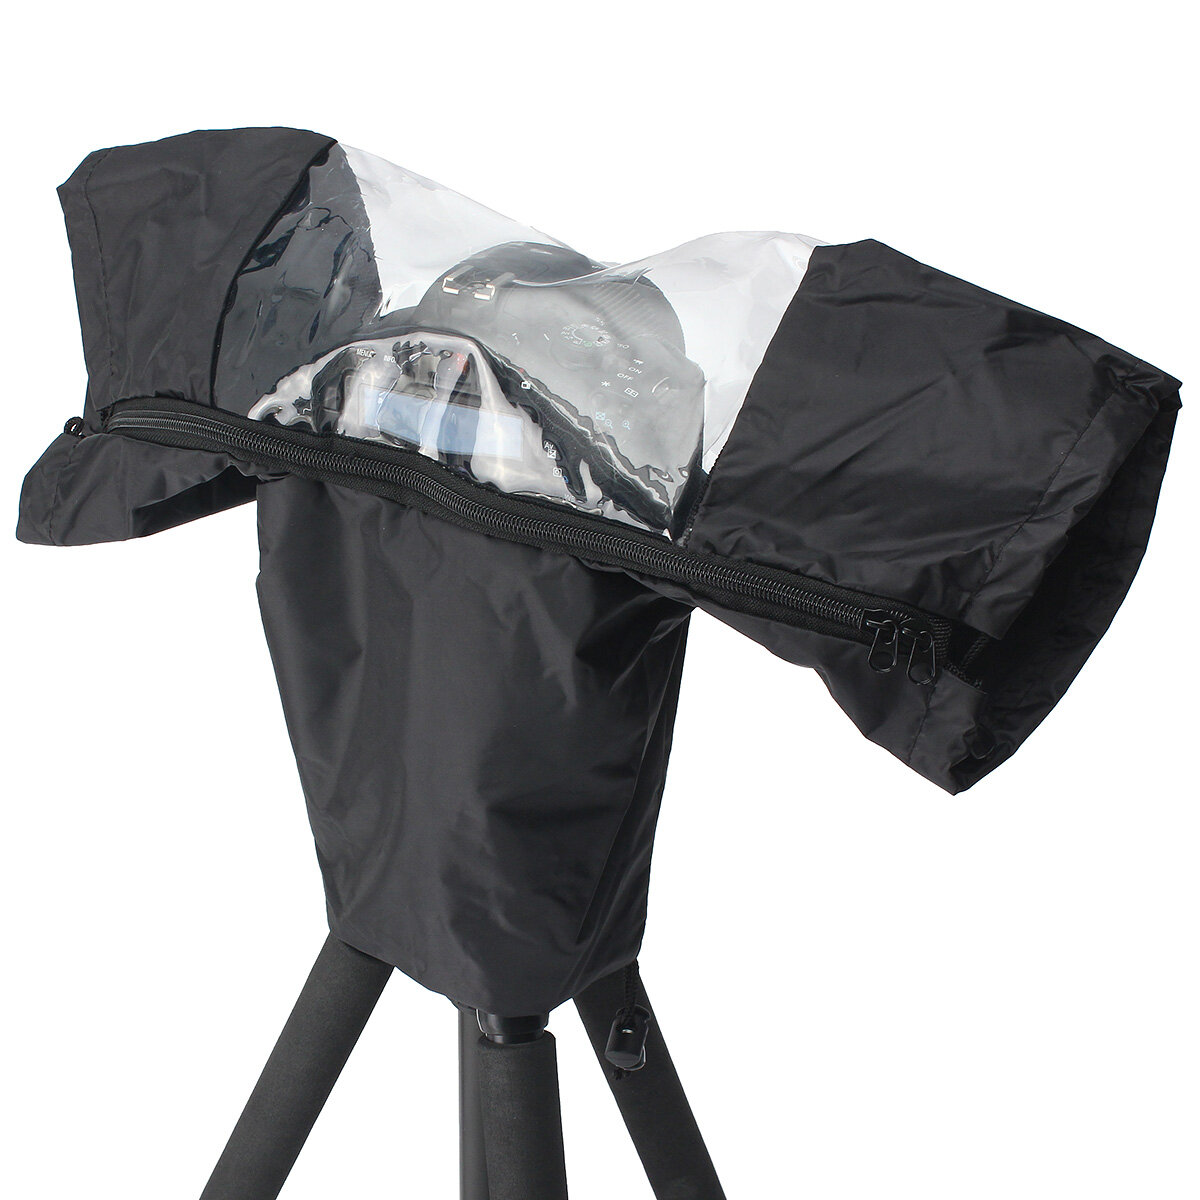 Waterproof Photo Rain Cover Protective Gear For Canon Nikon Pentax DSLR Camera